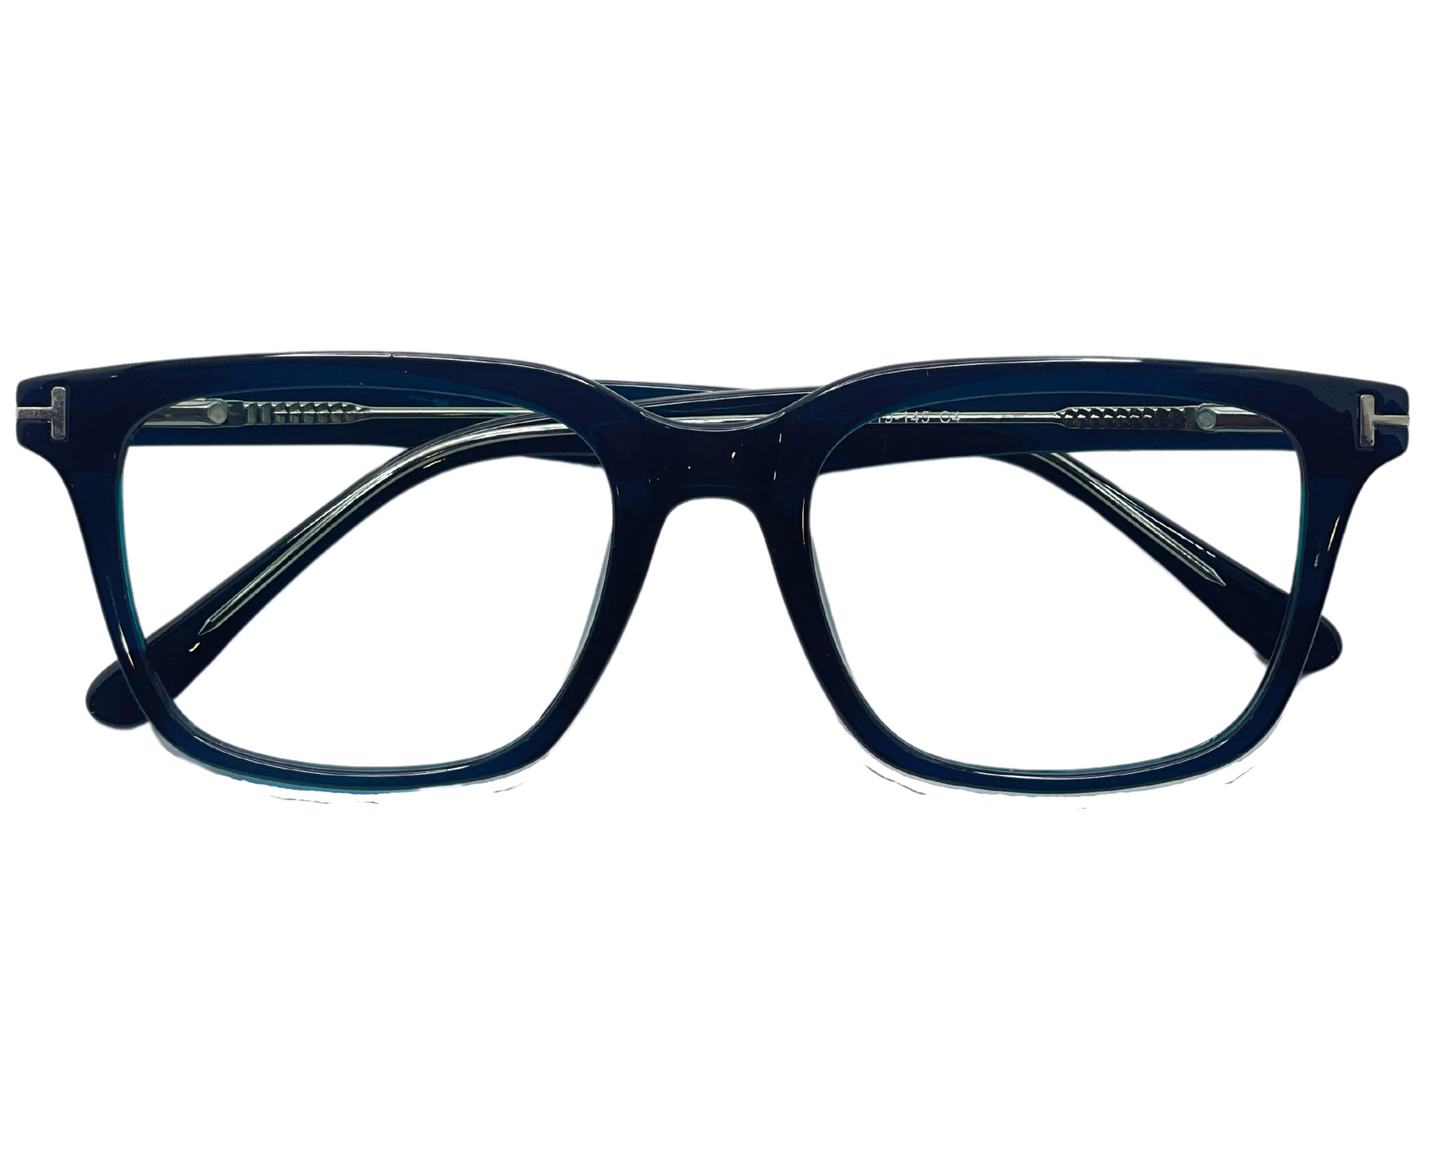 NS Deluxe - 8602 - Blue - Eyeglasses